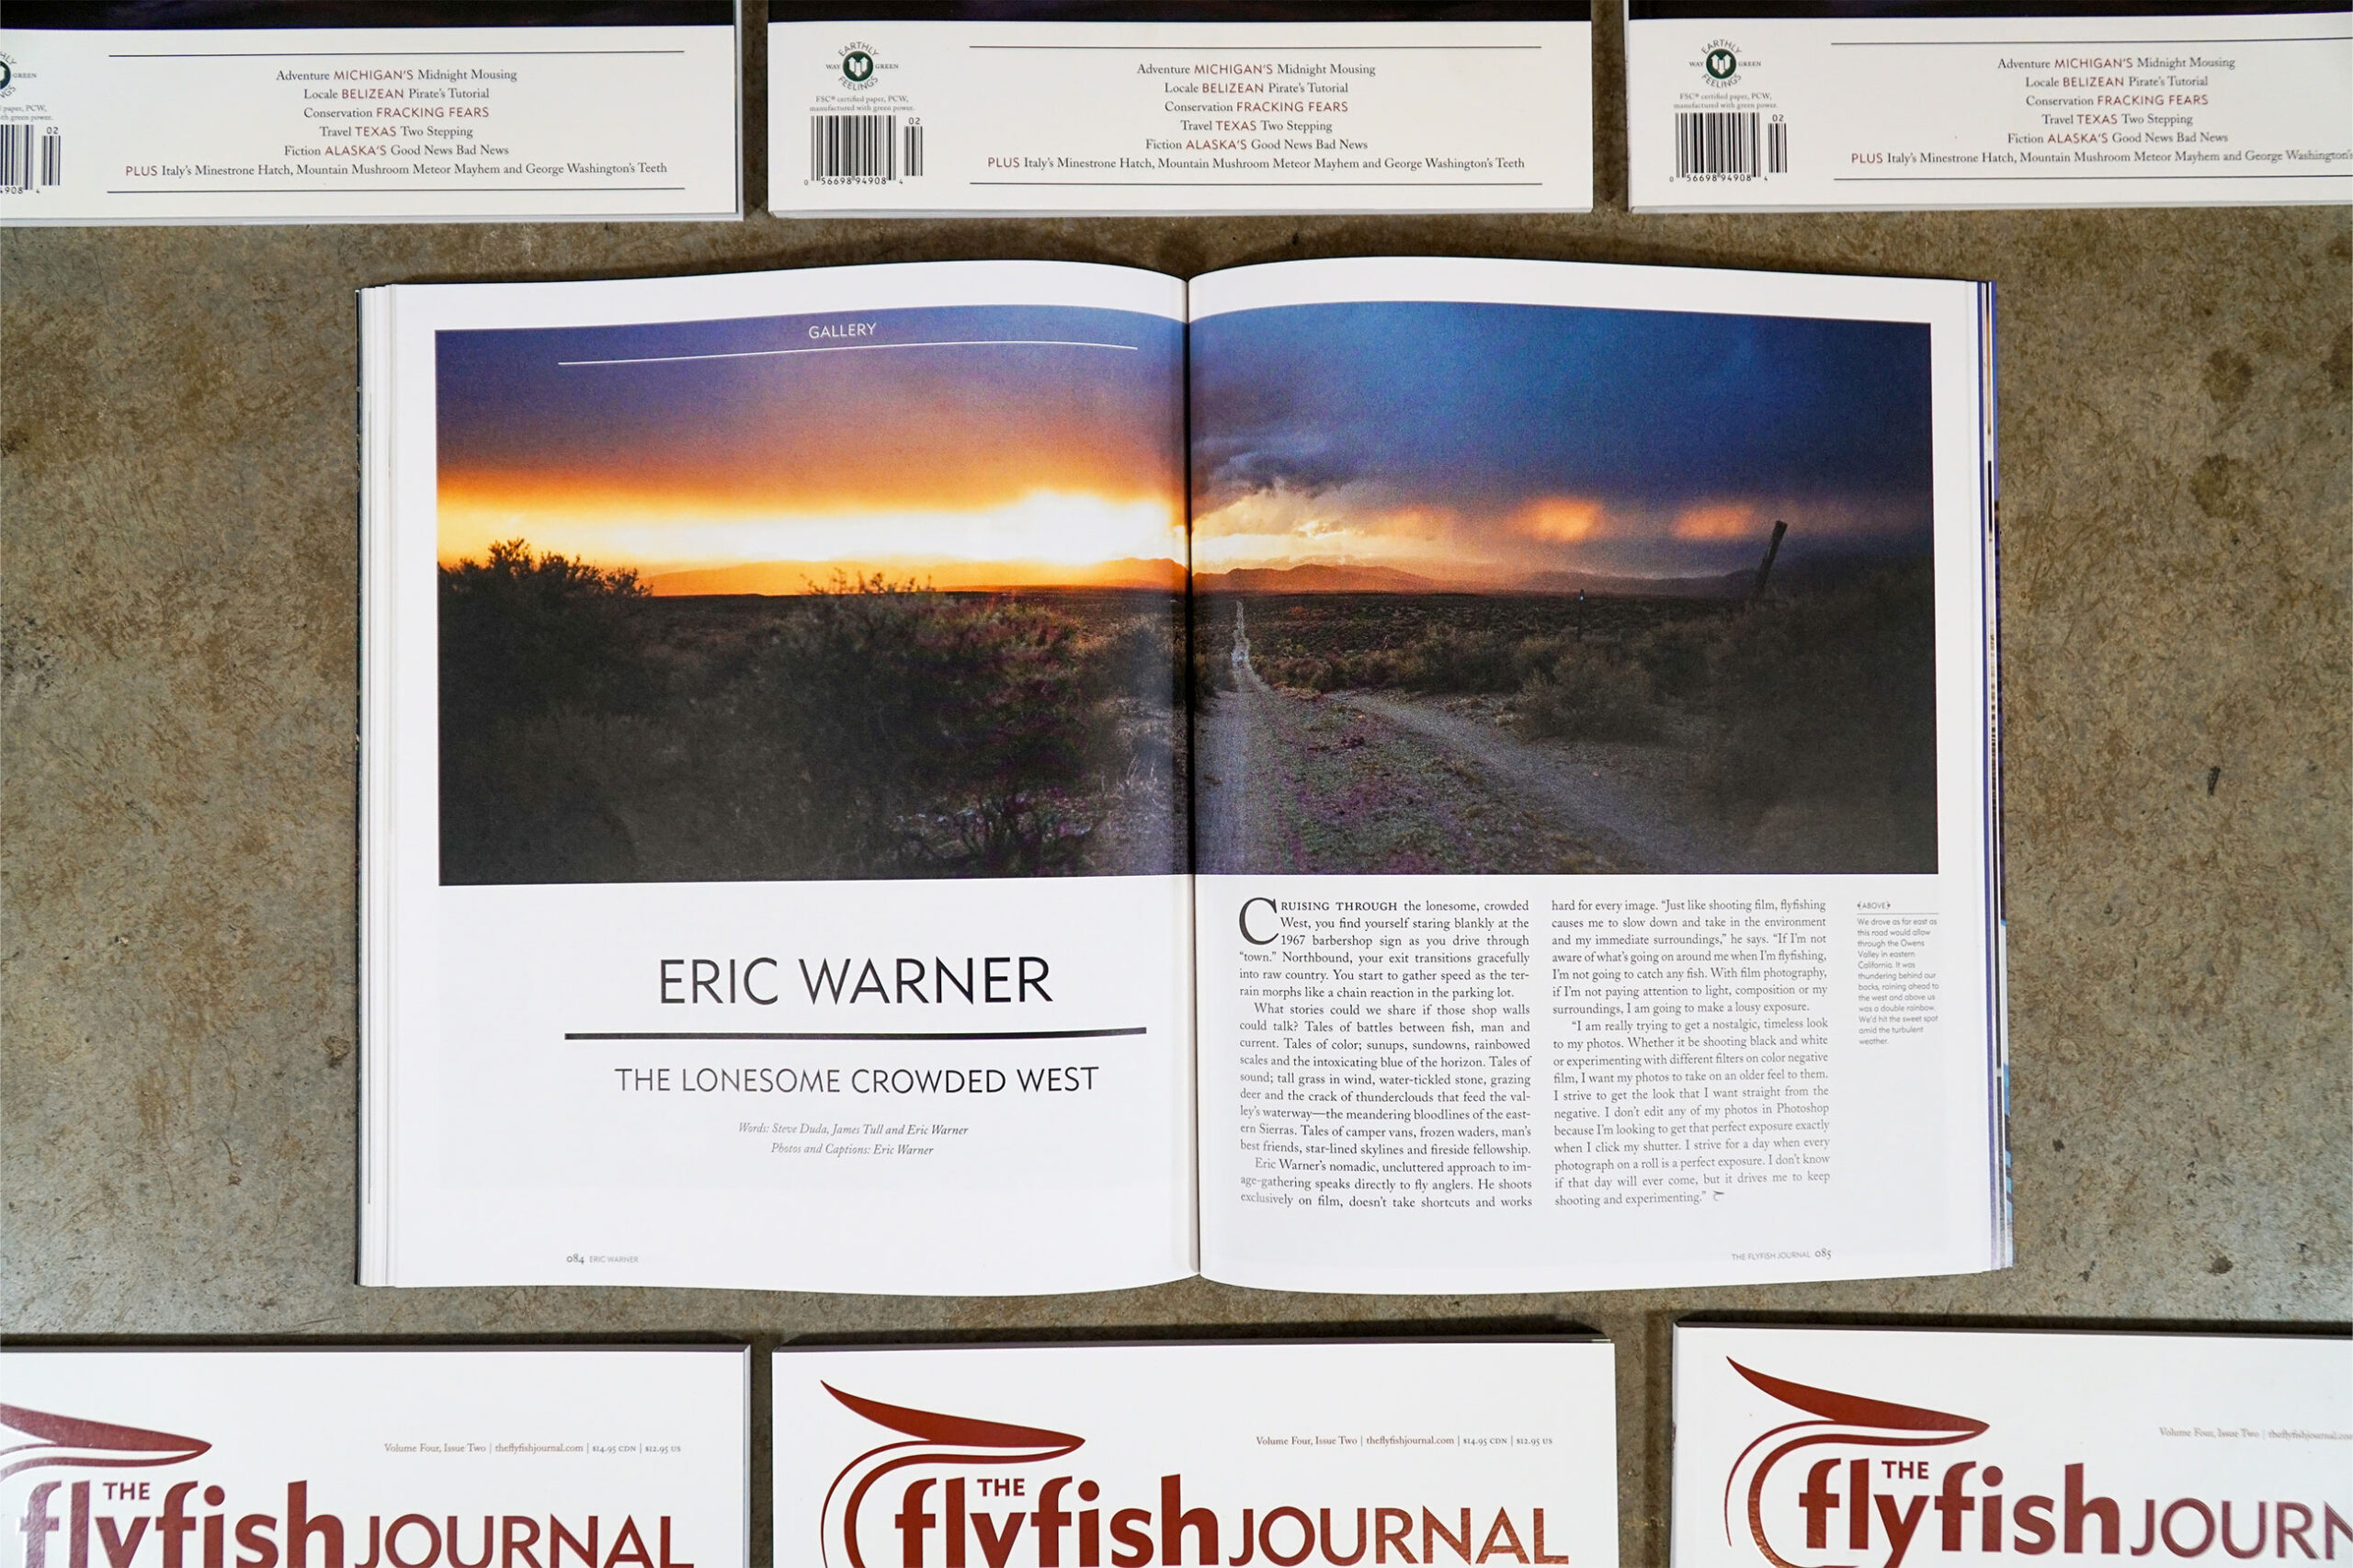 The Flyfish Journal Volume 4 Issue 2 Feature Eric Warner